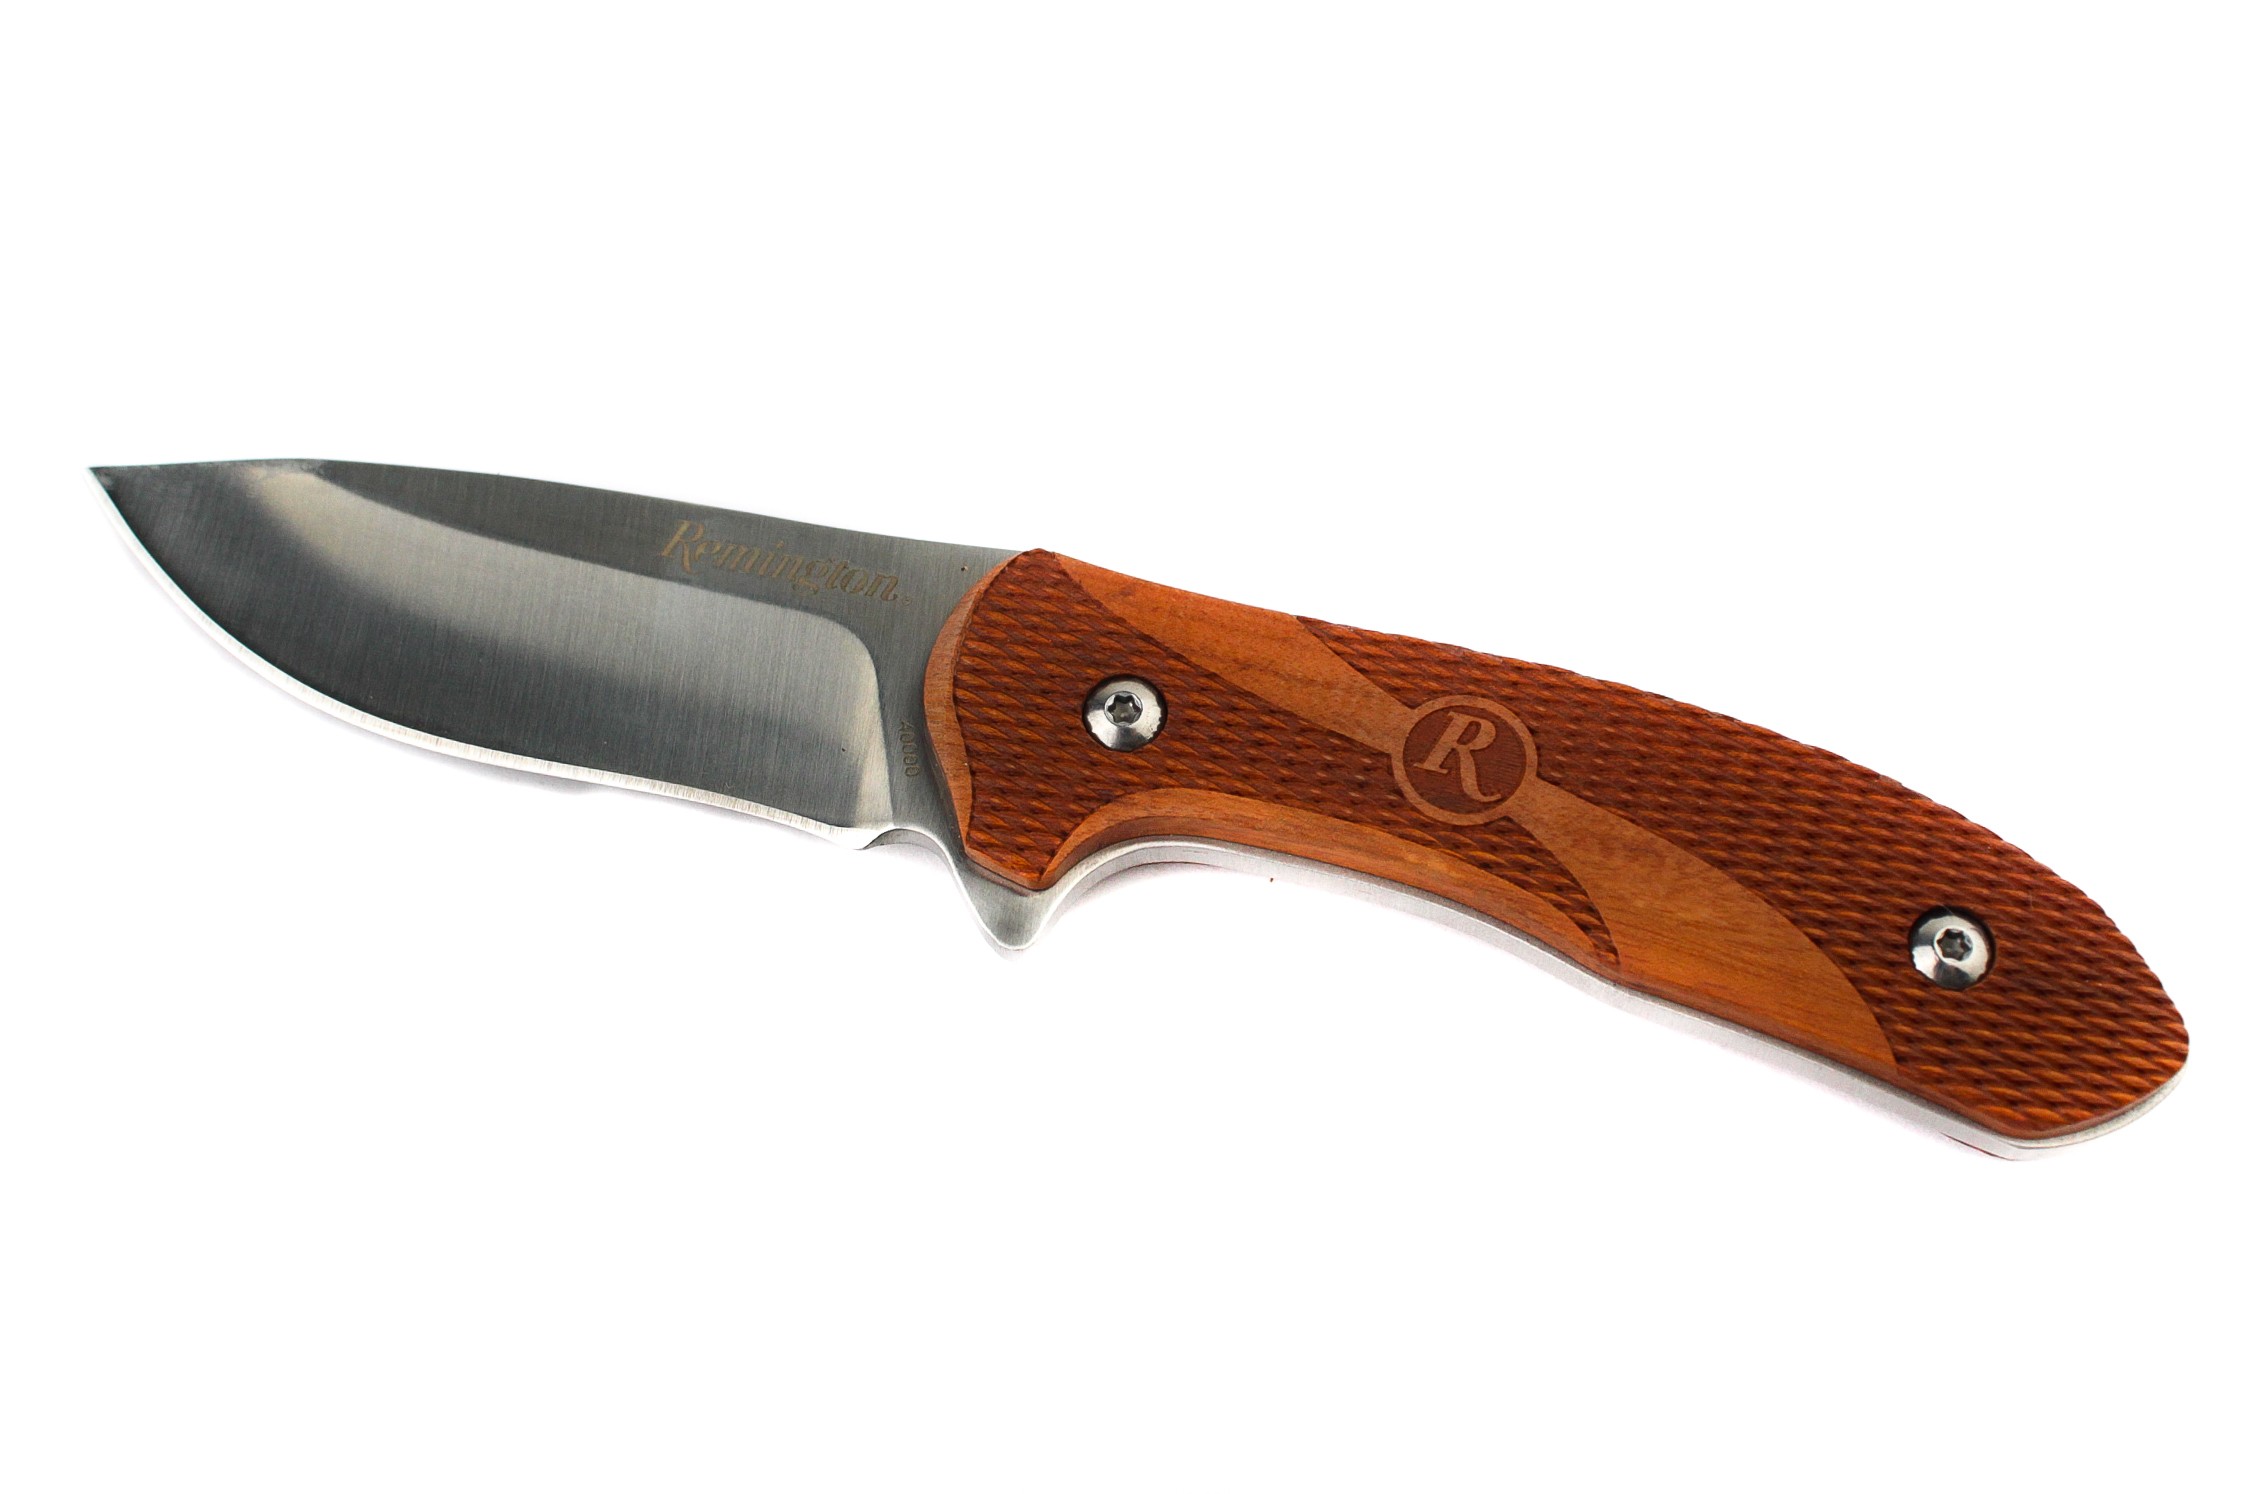 Нож Buck Remington Fixed 7.4 wood handle фикс клинок 420J2 дерево - фото 1